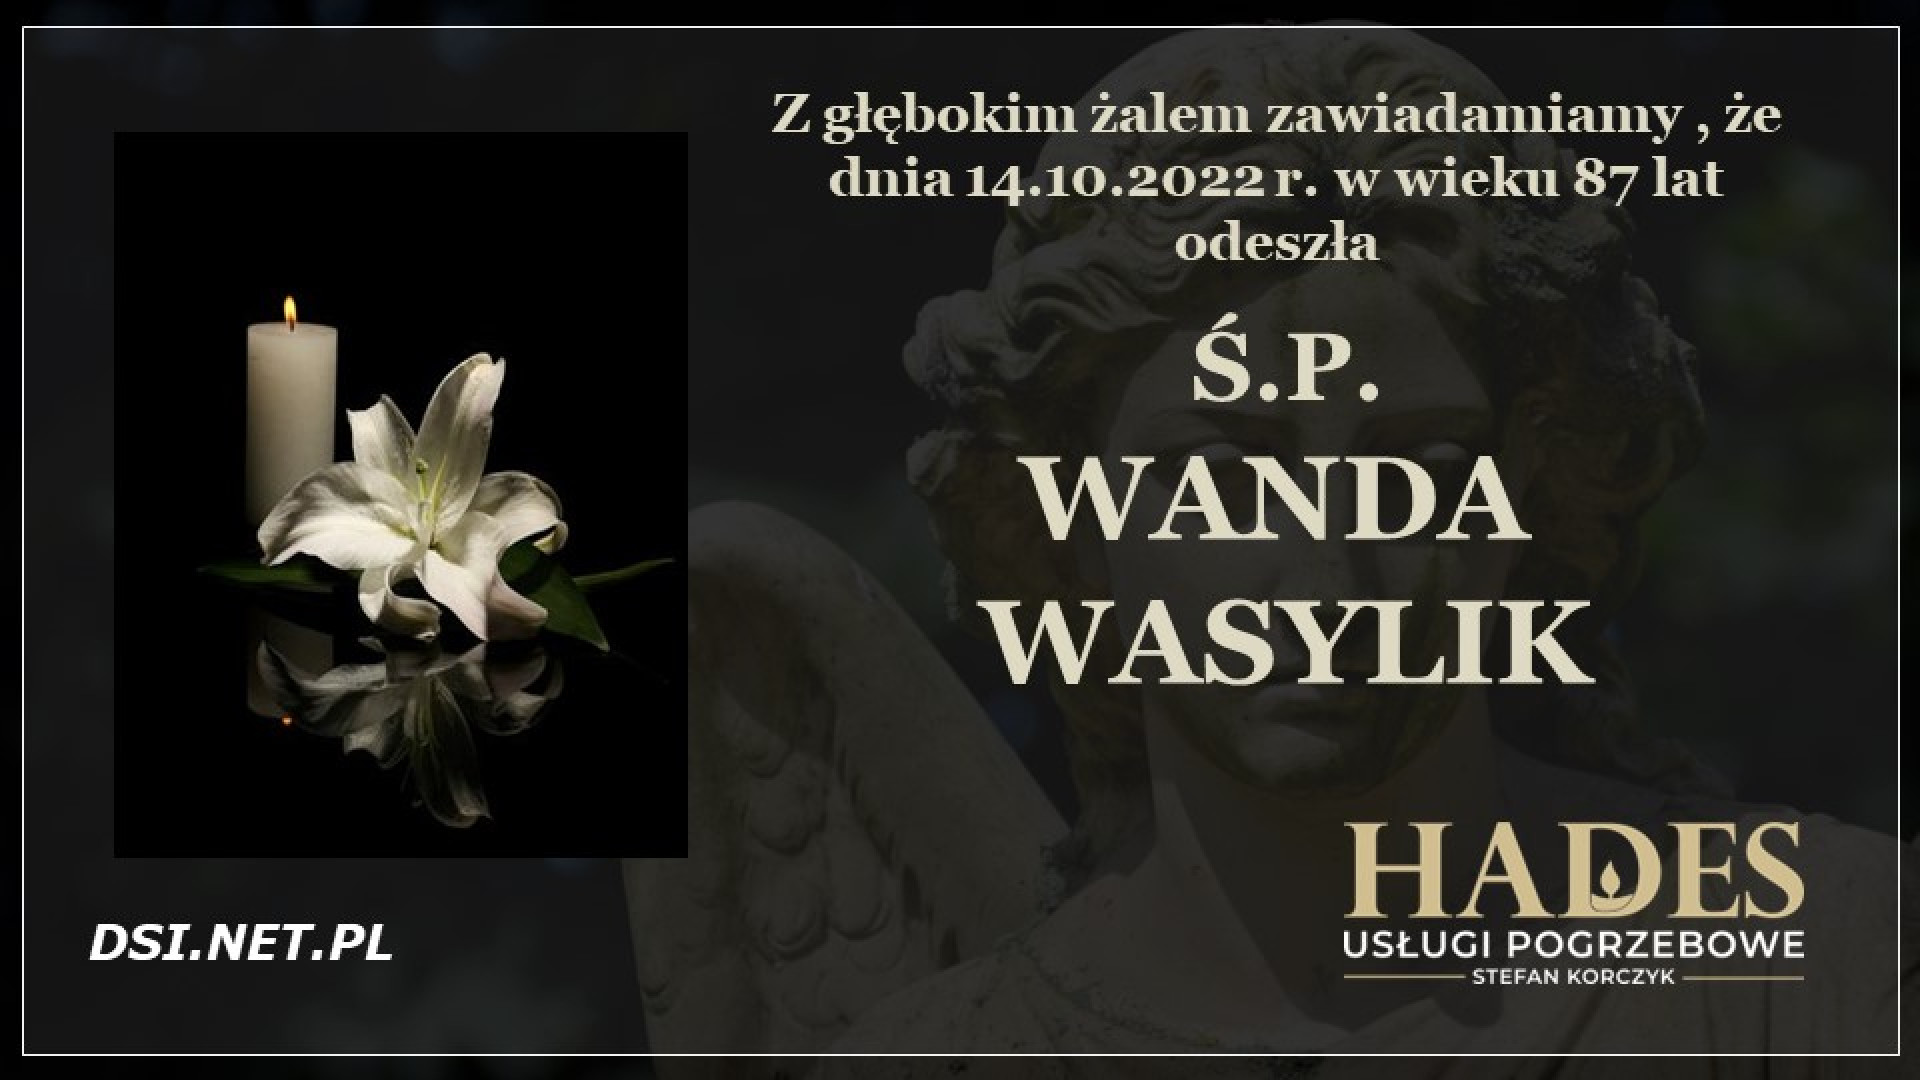 Ś.P. Wanda Wasylik